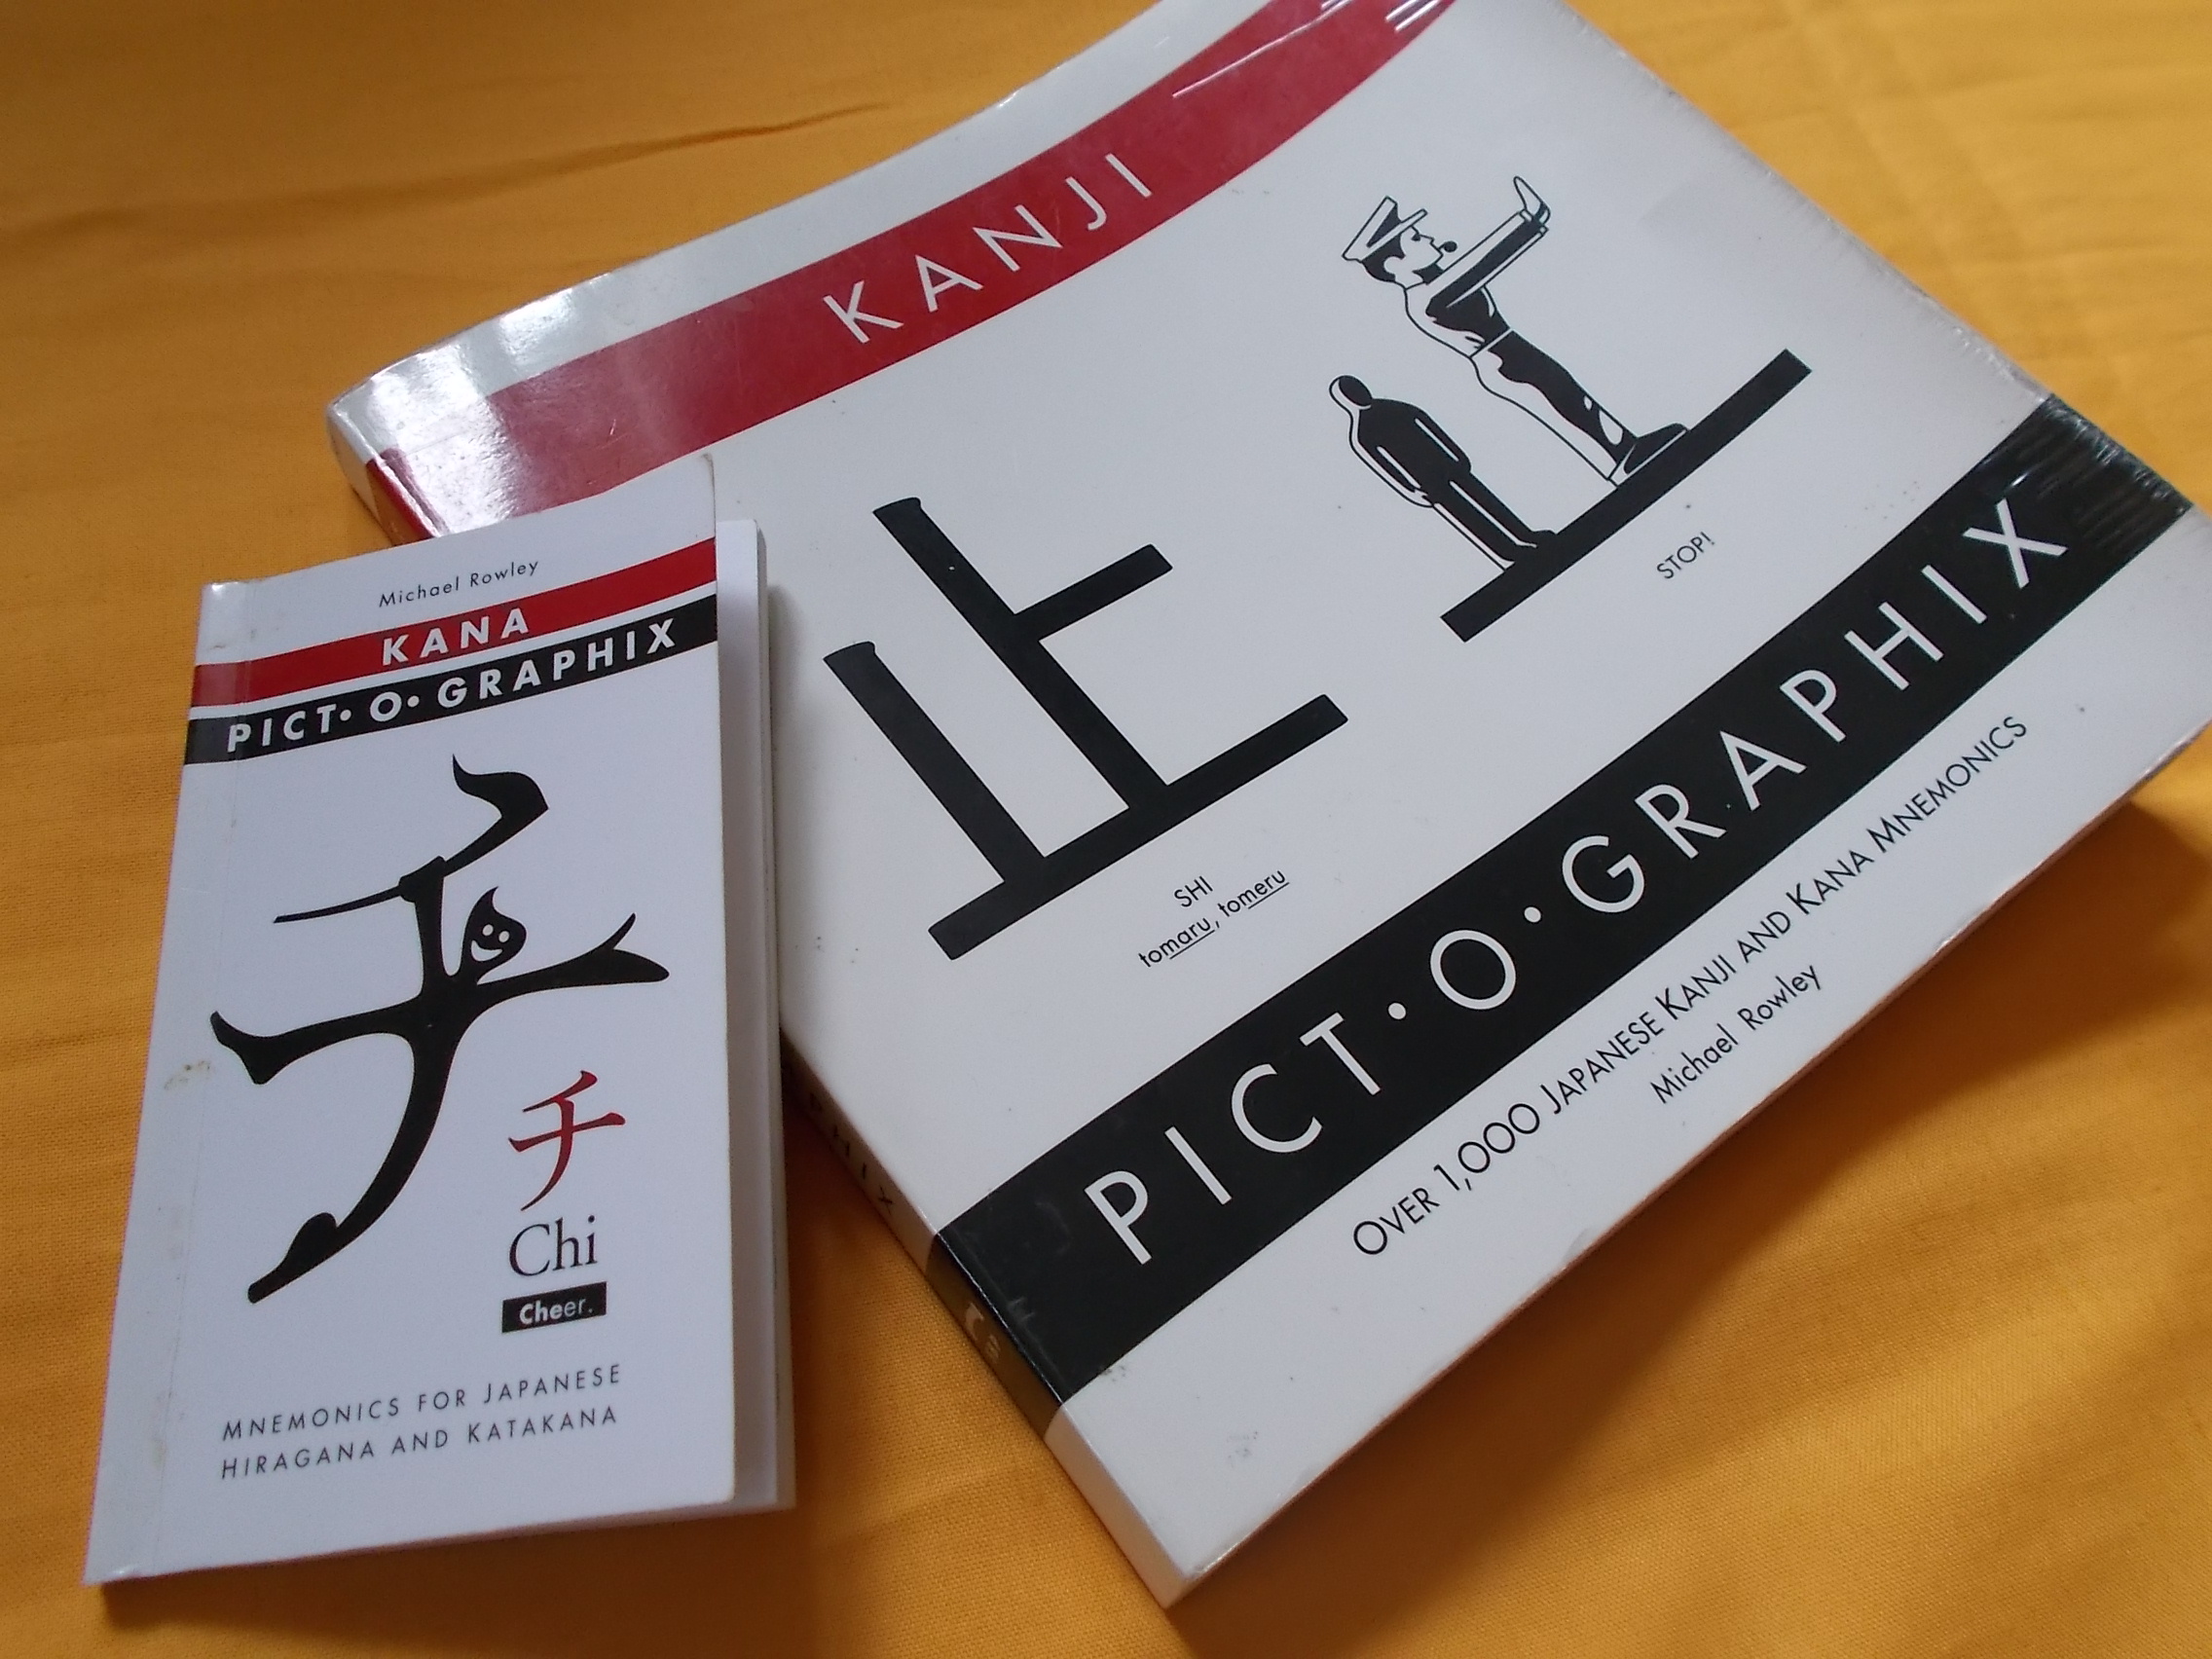 Kanji pict o graphix rar files